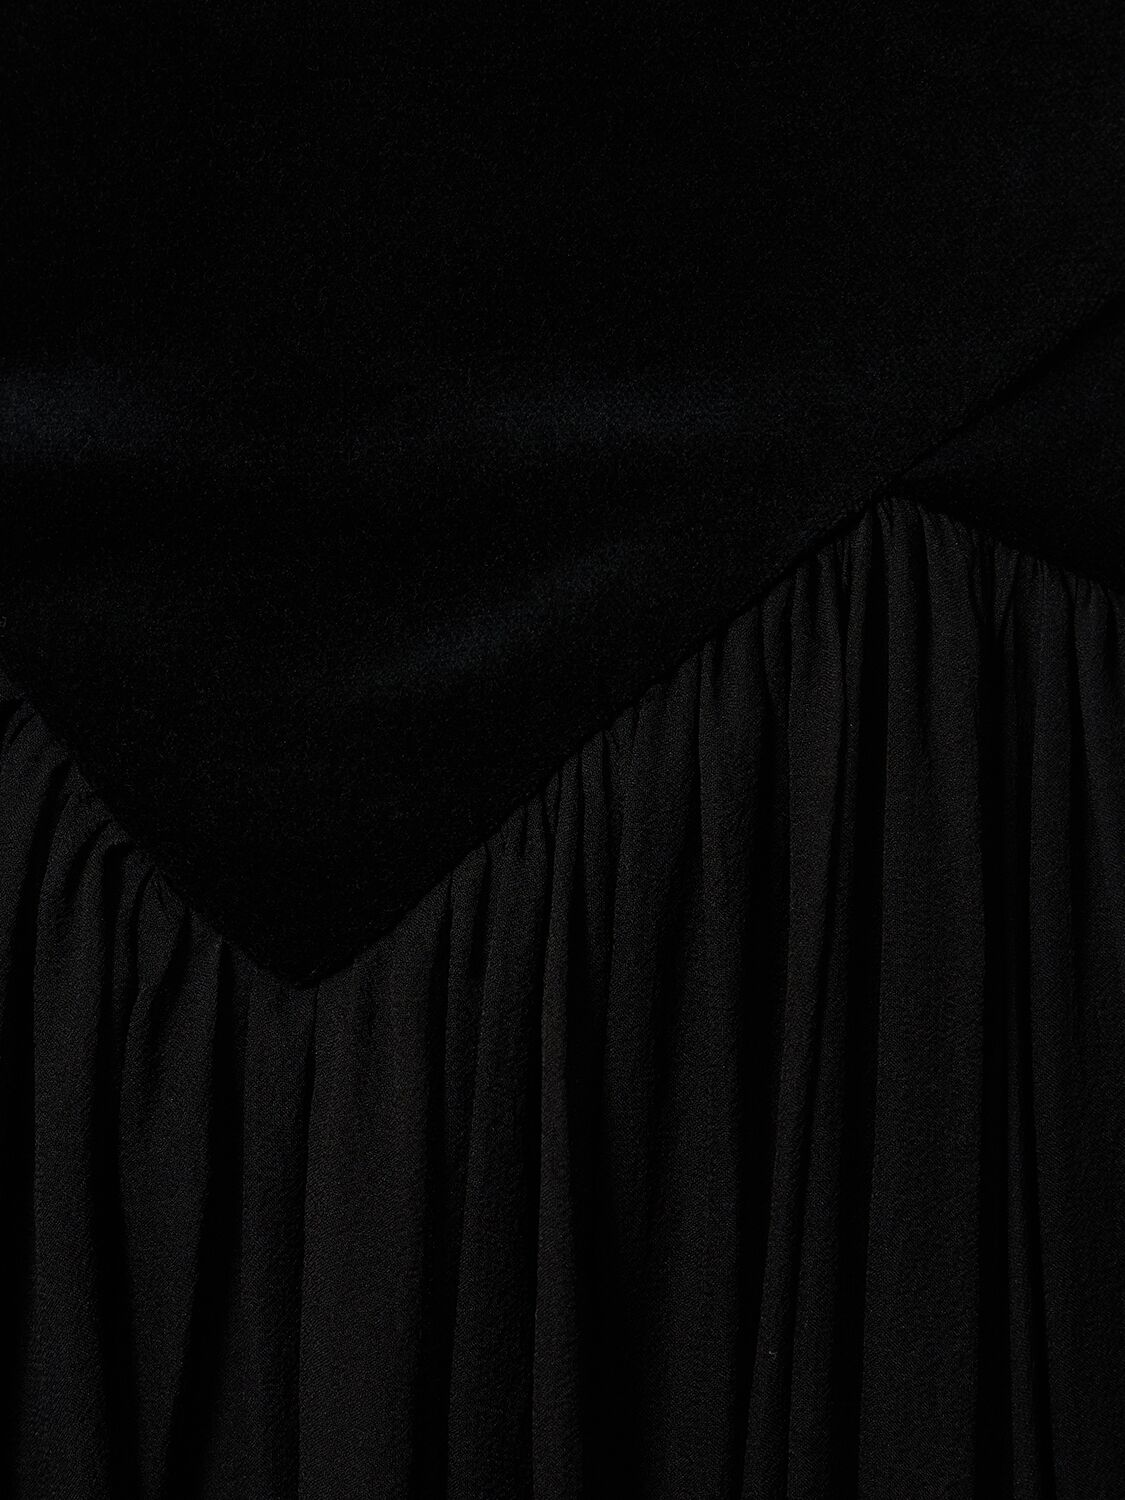 Shop Zuhair Murad Heart-shaped Velvet & Chiffon Maxi Dress In Black